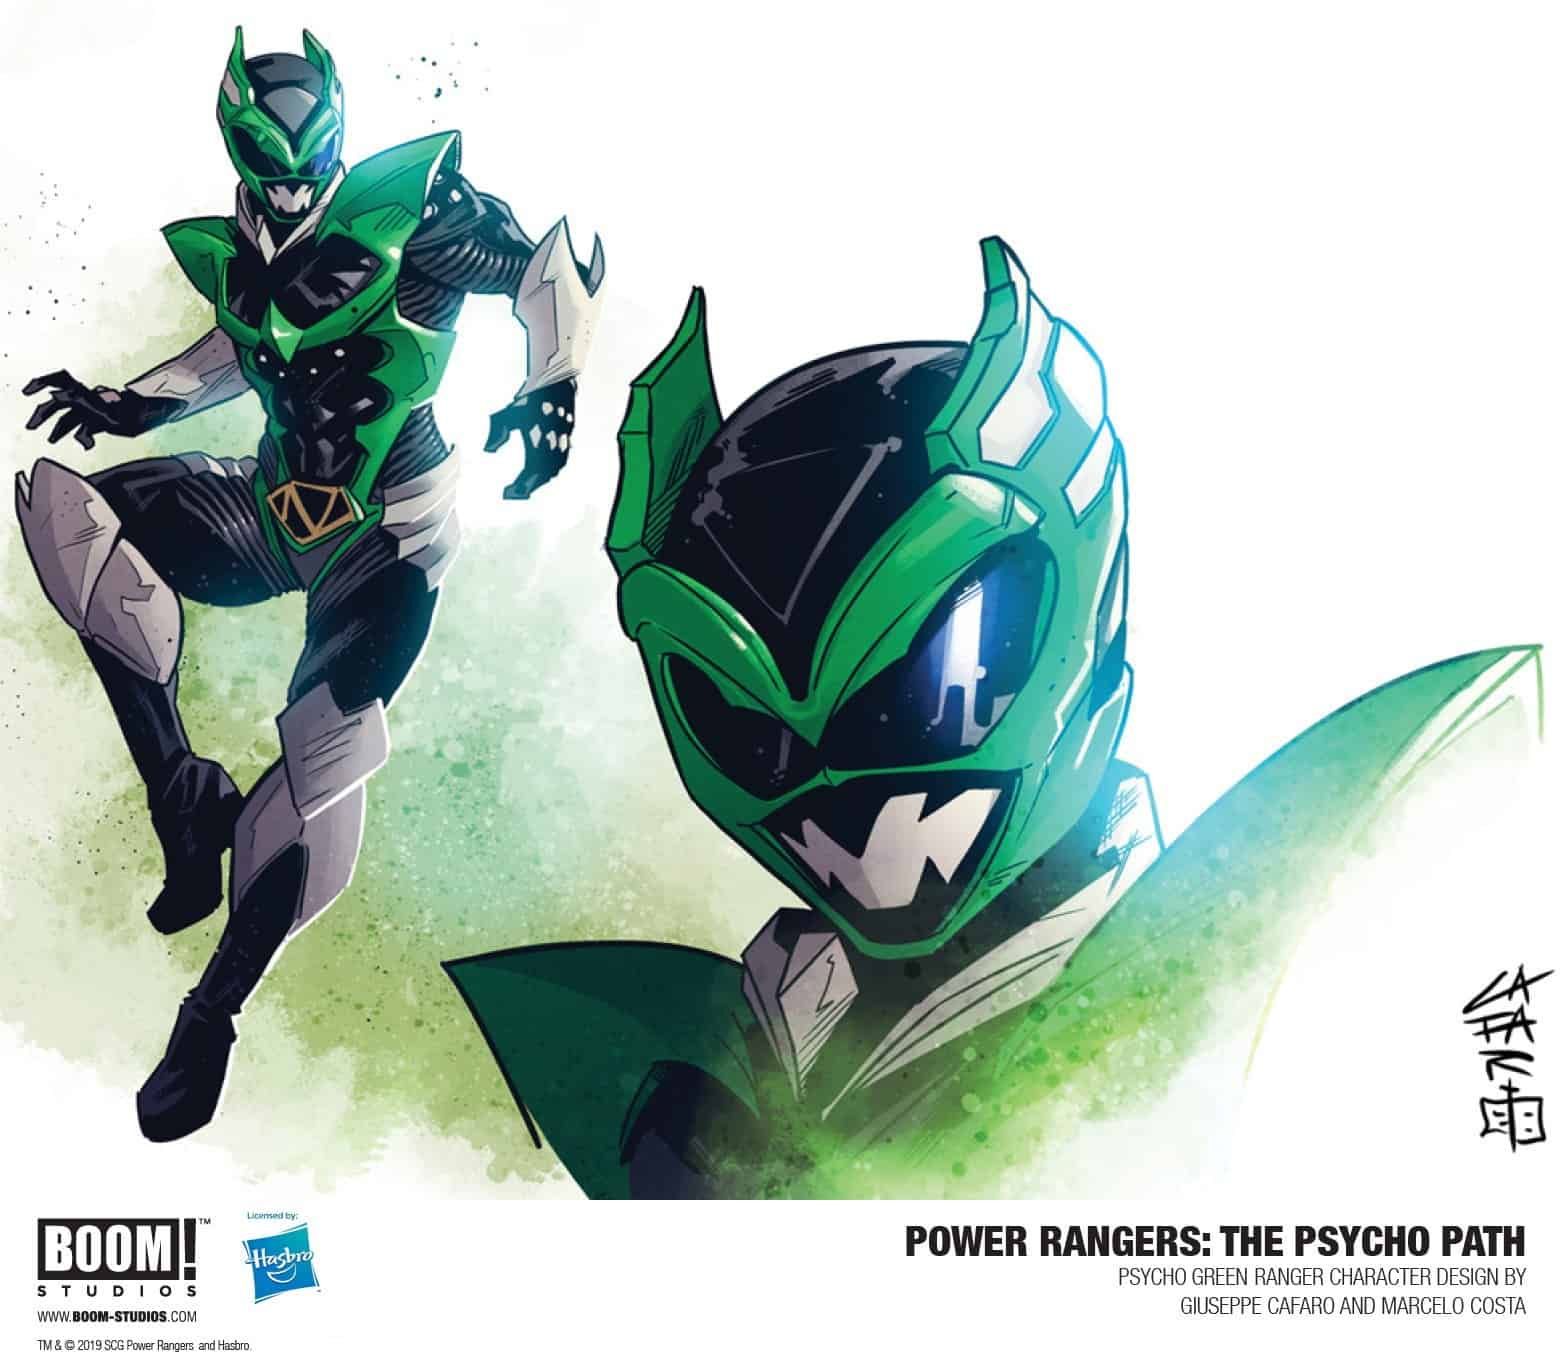 Psycho Ranger character design